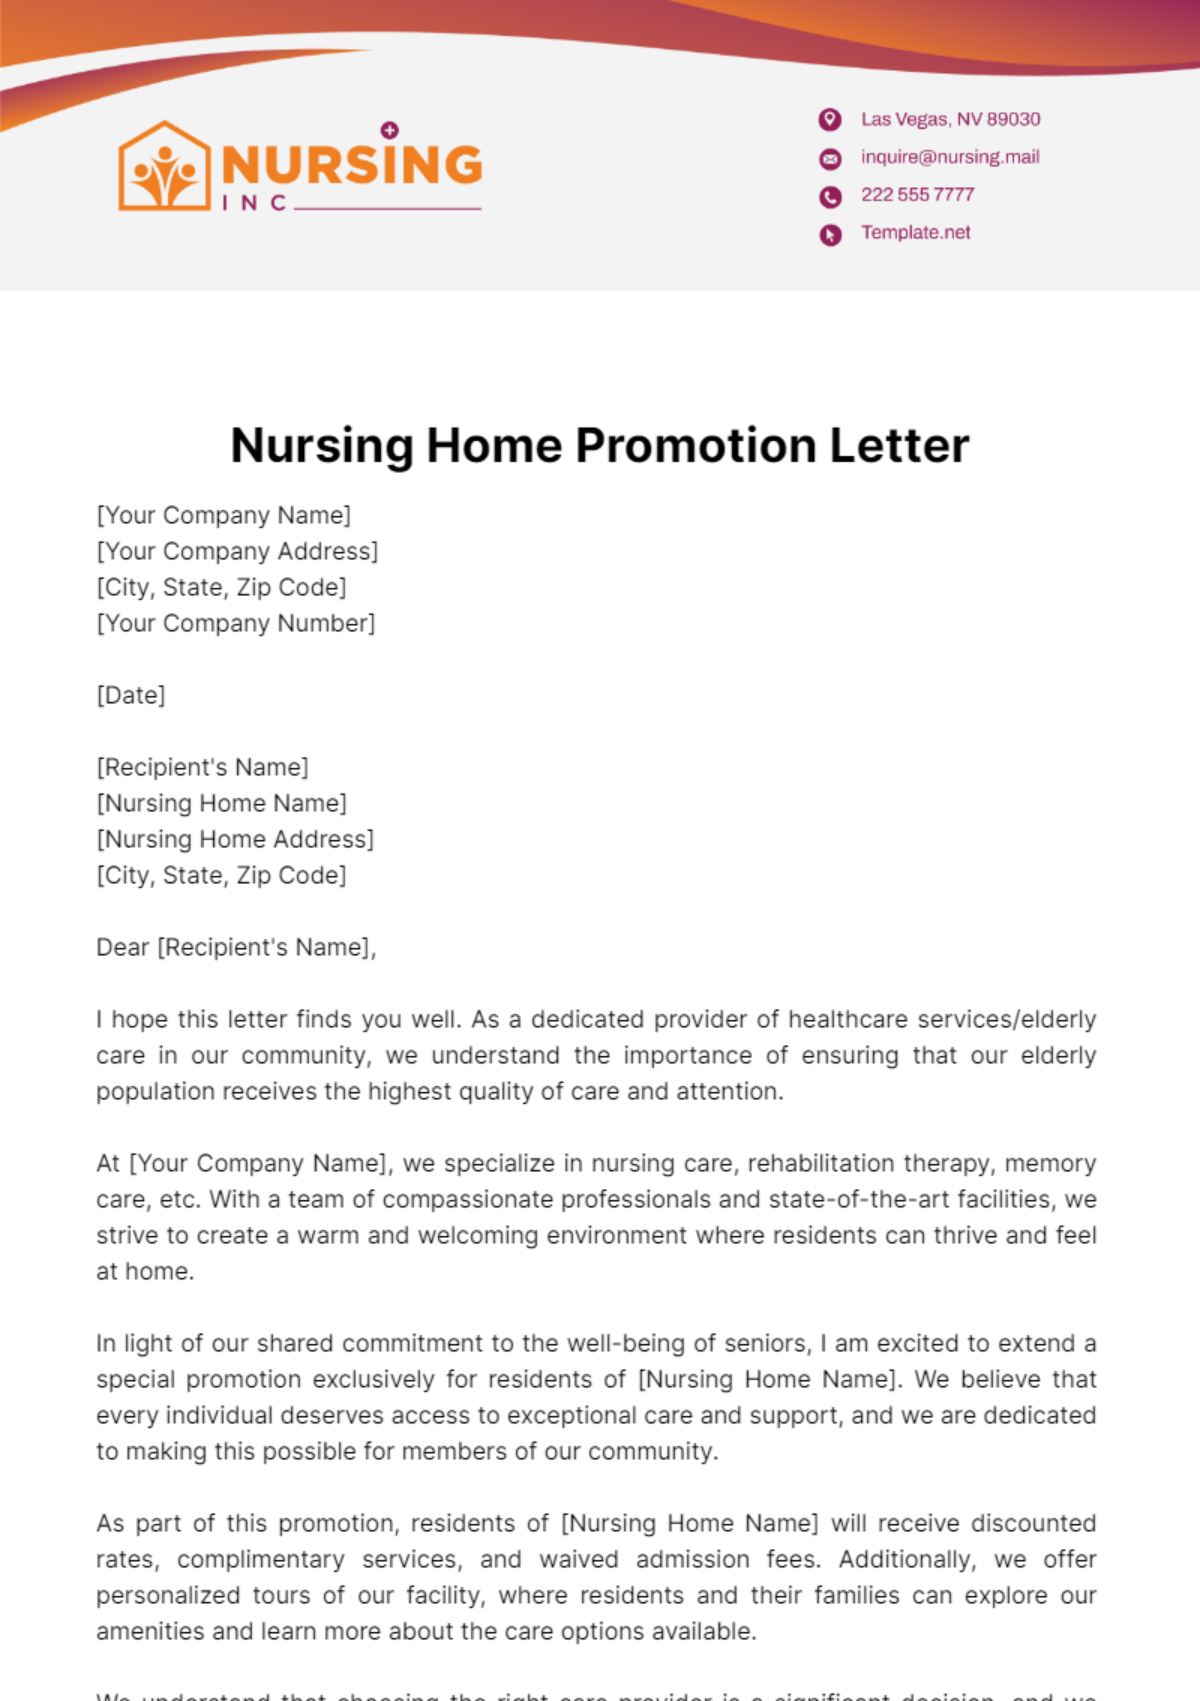 Nursing Home Promotion Letter Template